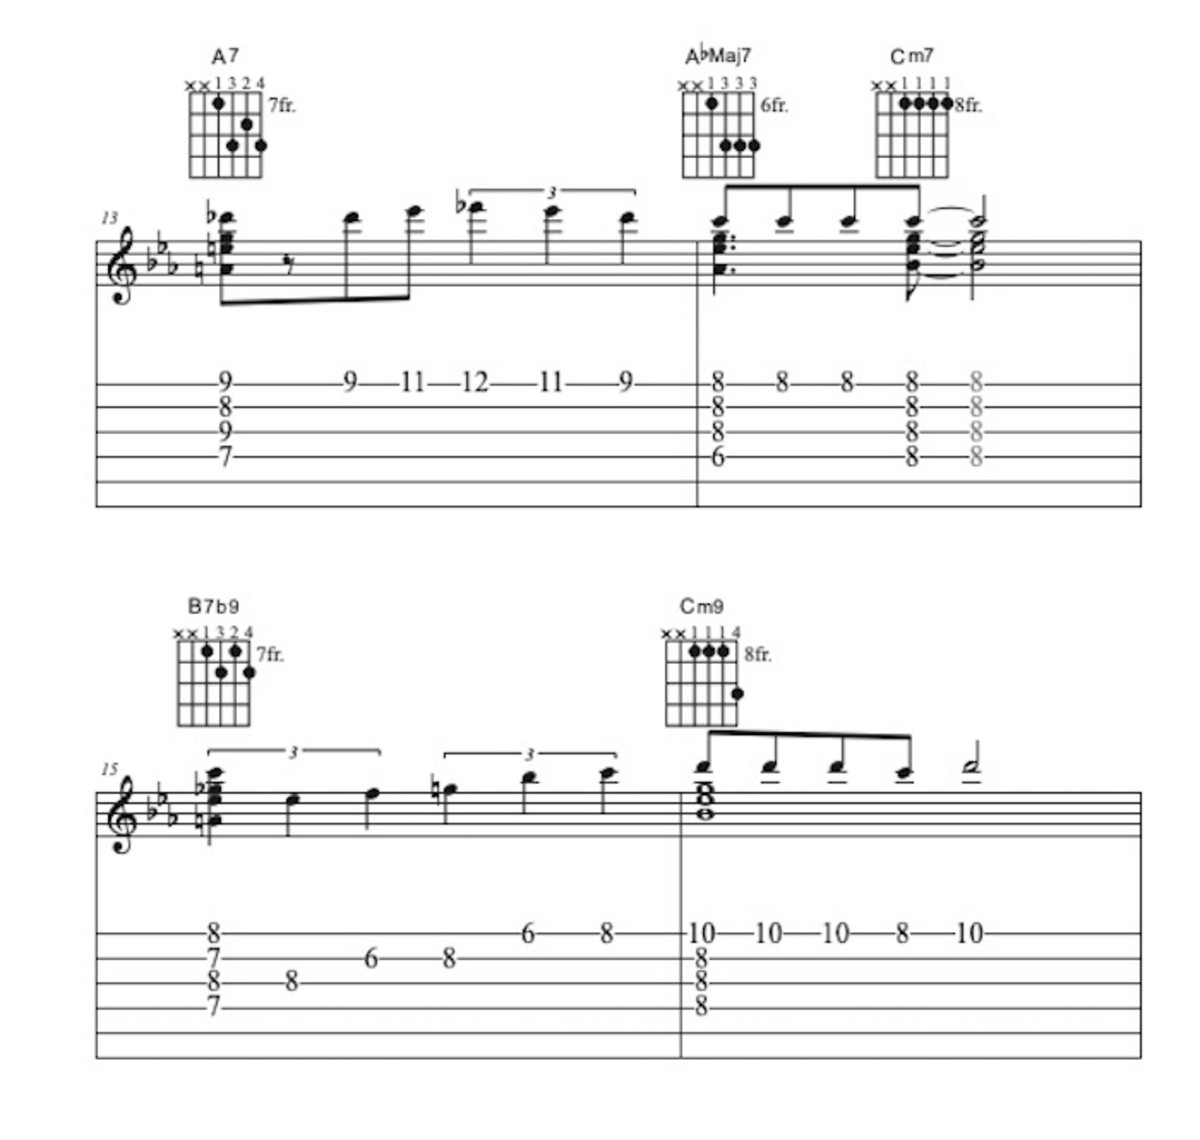 misty-chord-melody